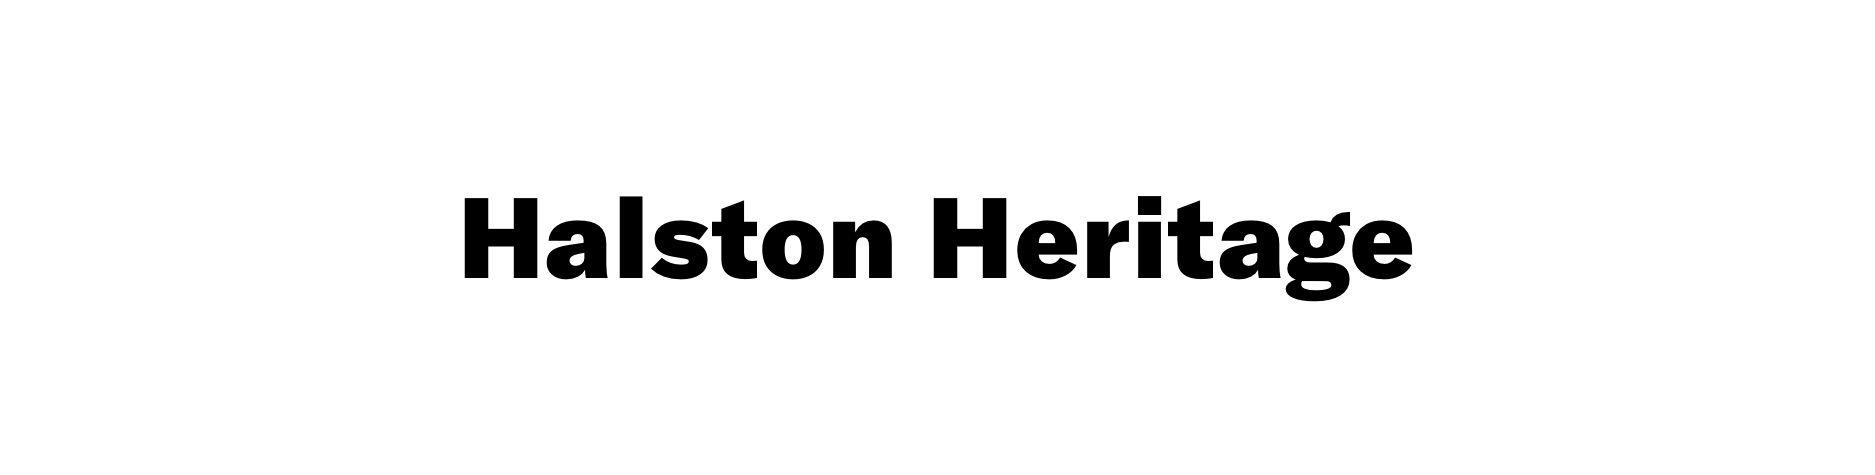 Halston Logo - Amazon.com: Shopbop: Halston Heritage